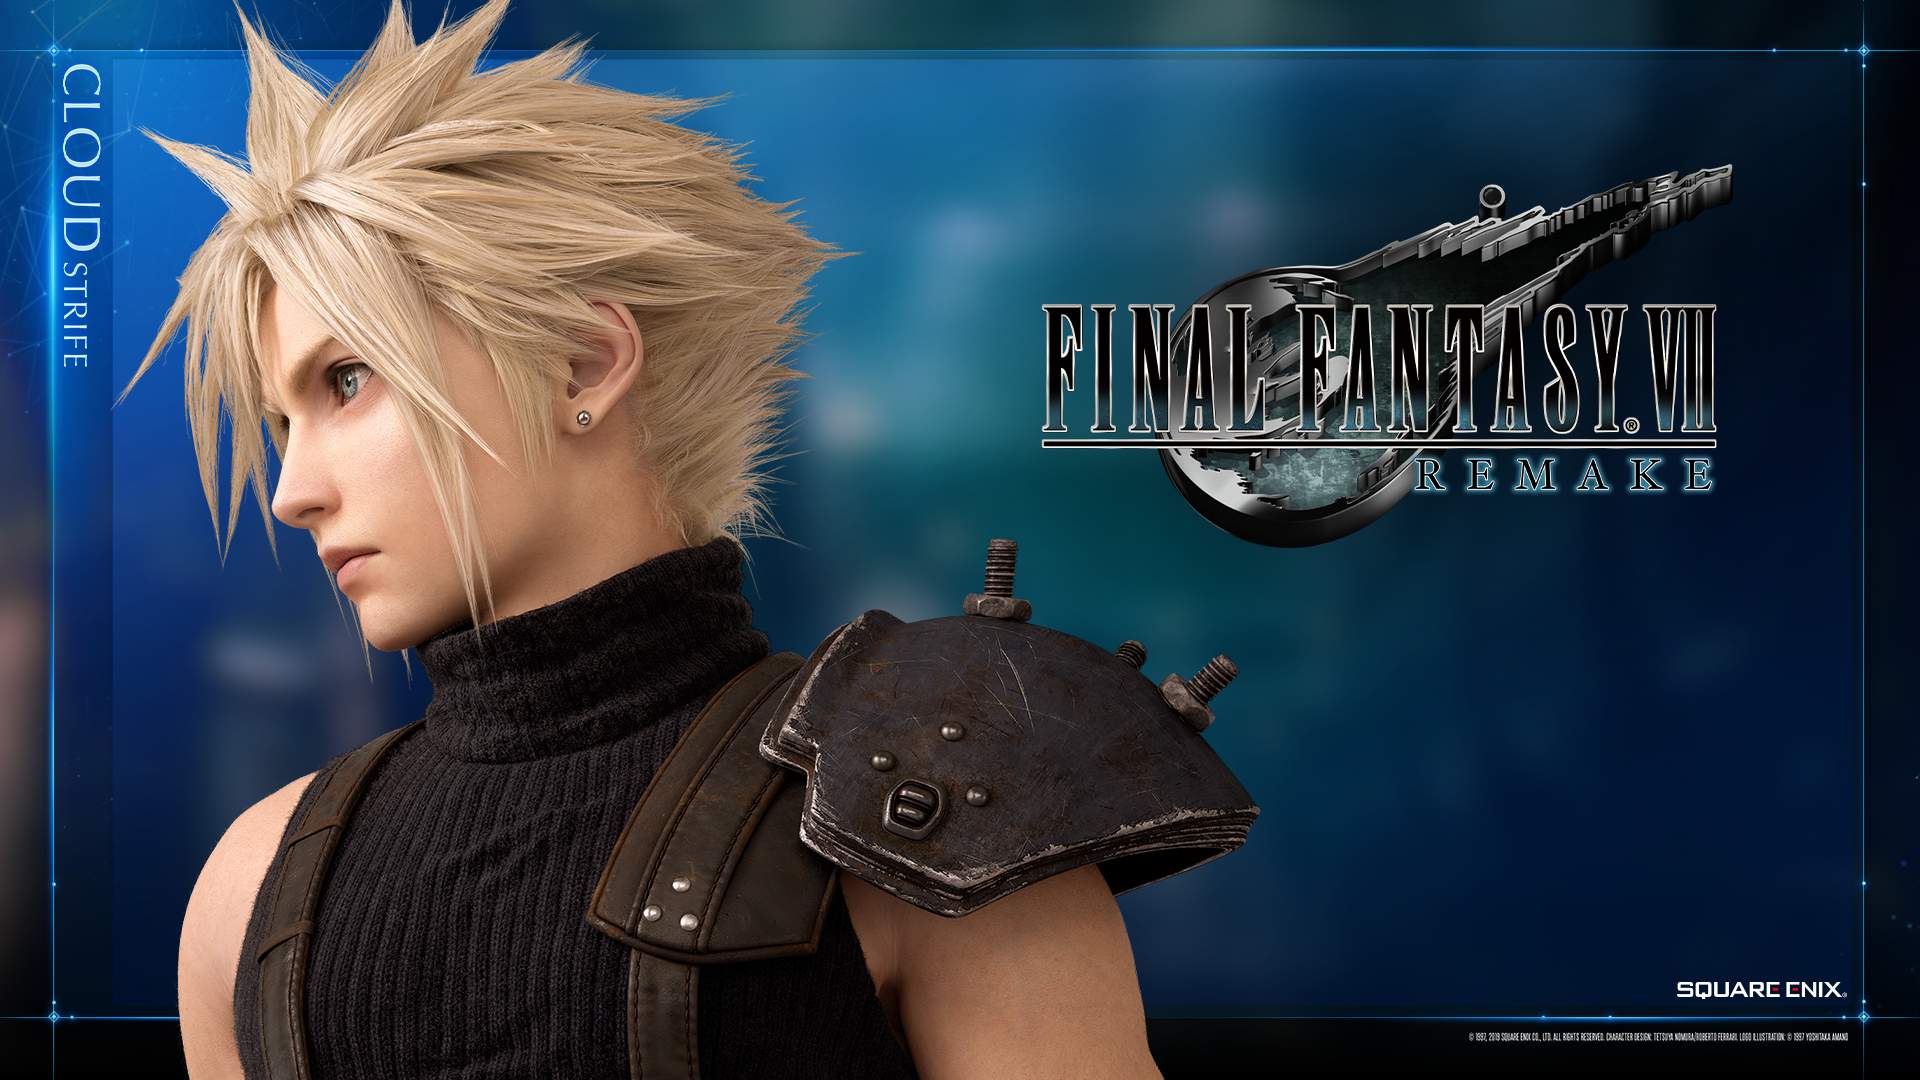 2. Cloud Strife (Final Fantasy VII) - wide 11